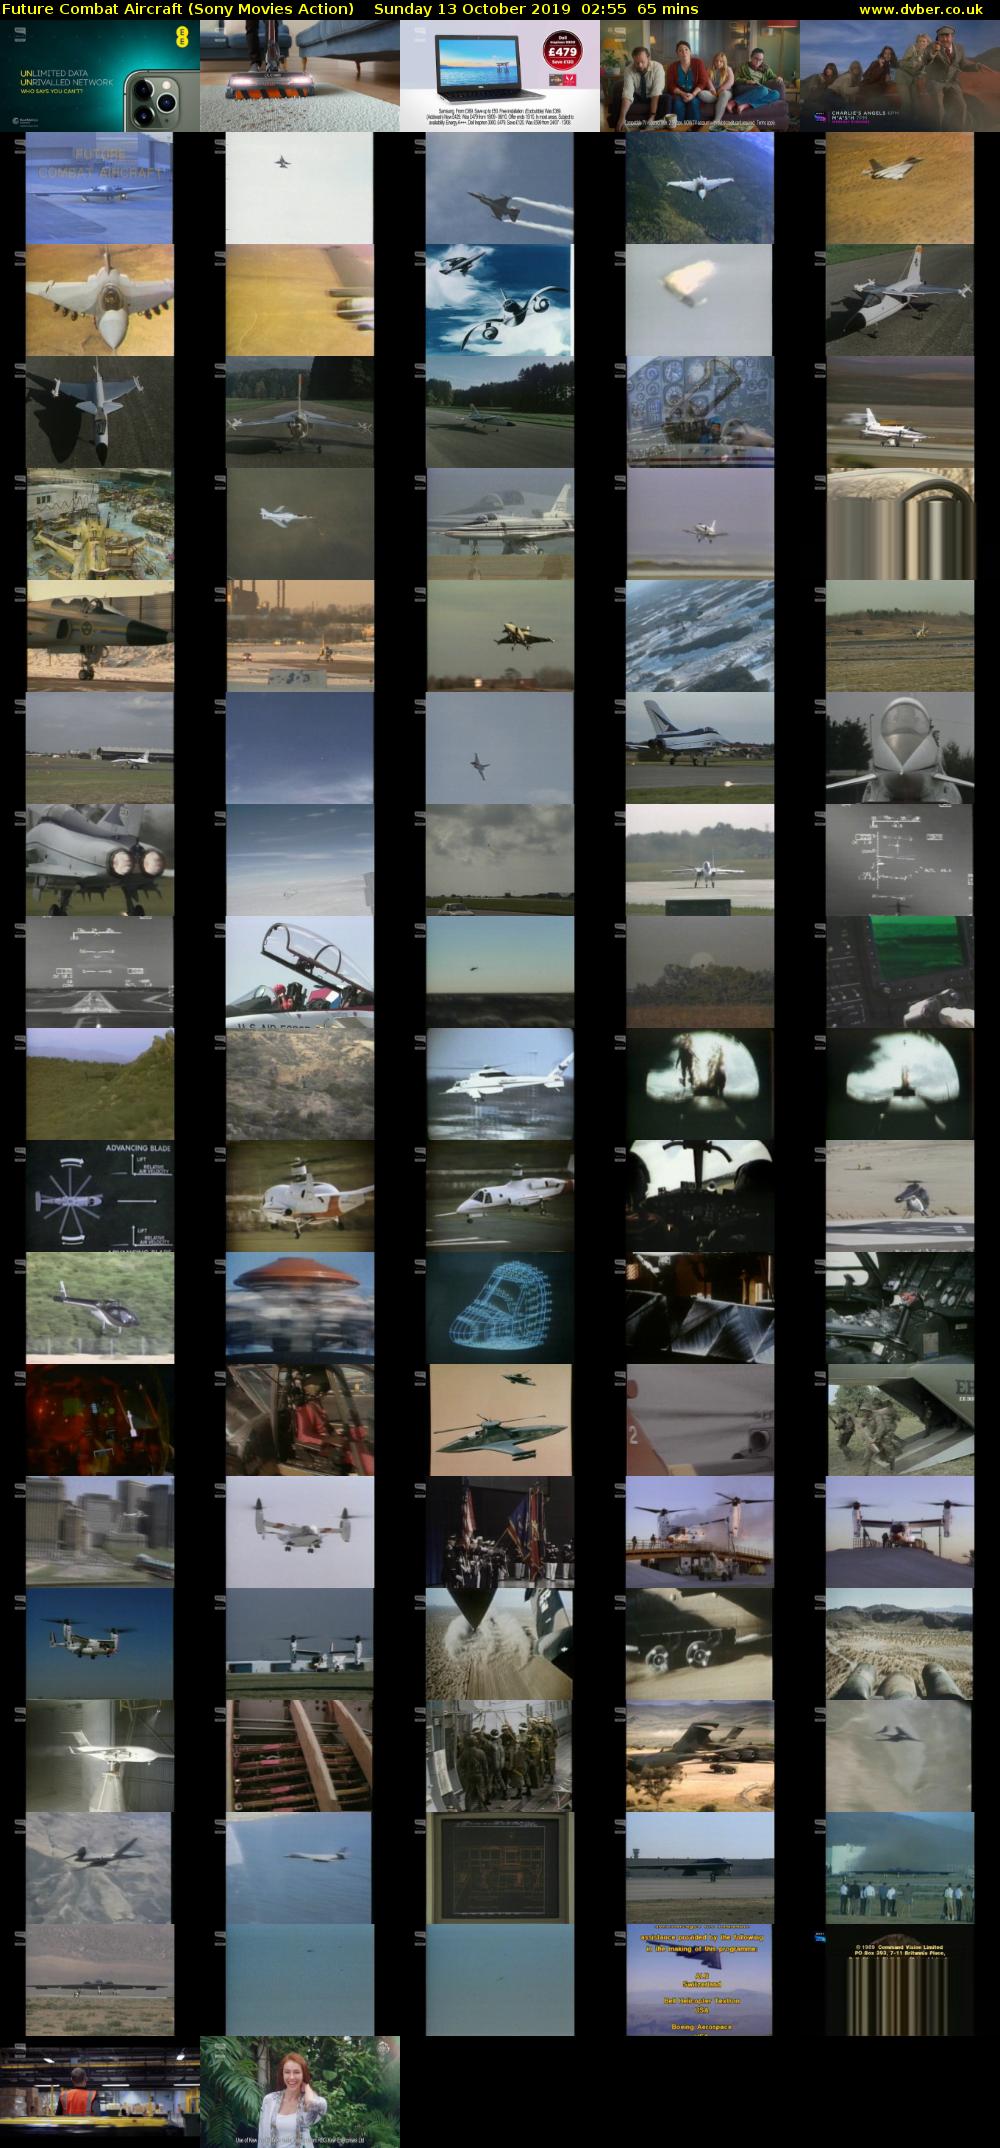 Future Combat Aircraft (Sony Movies Action) Sunday 13 October 2019 02:55 - 04:00